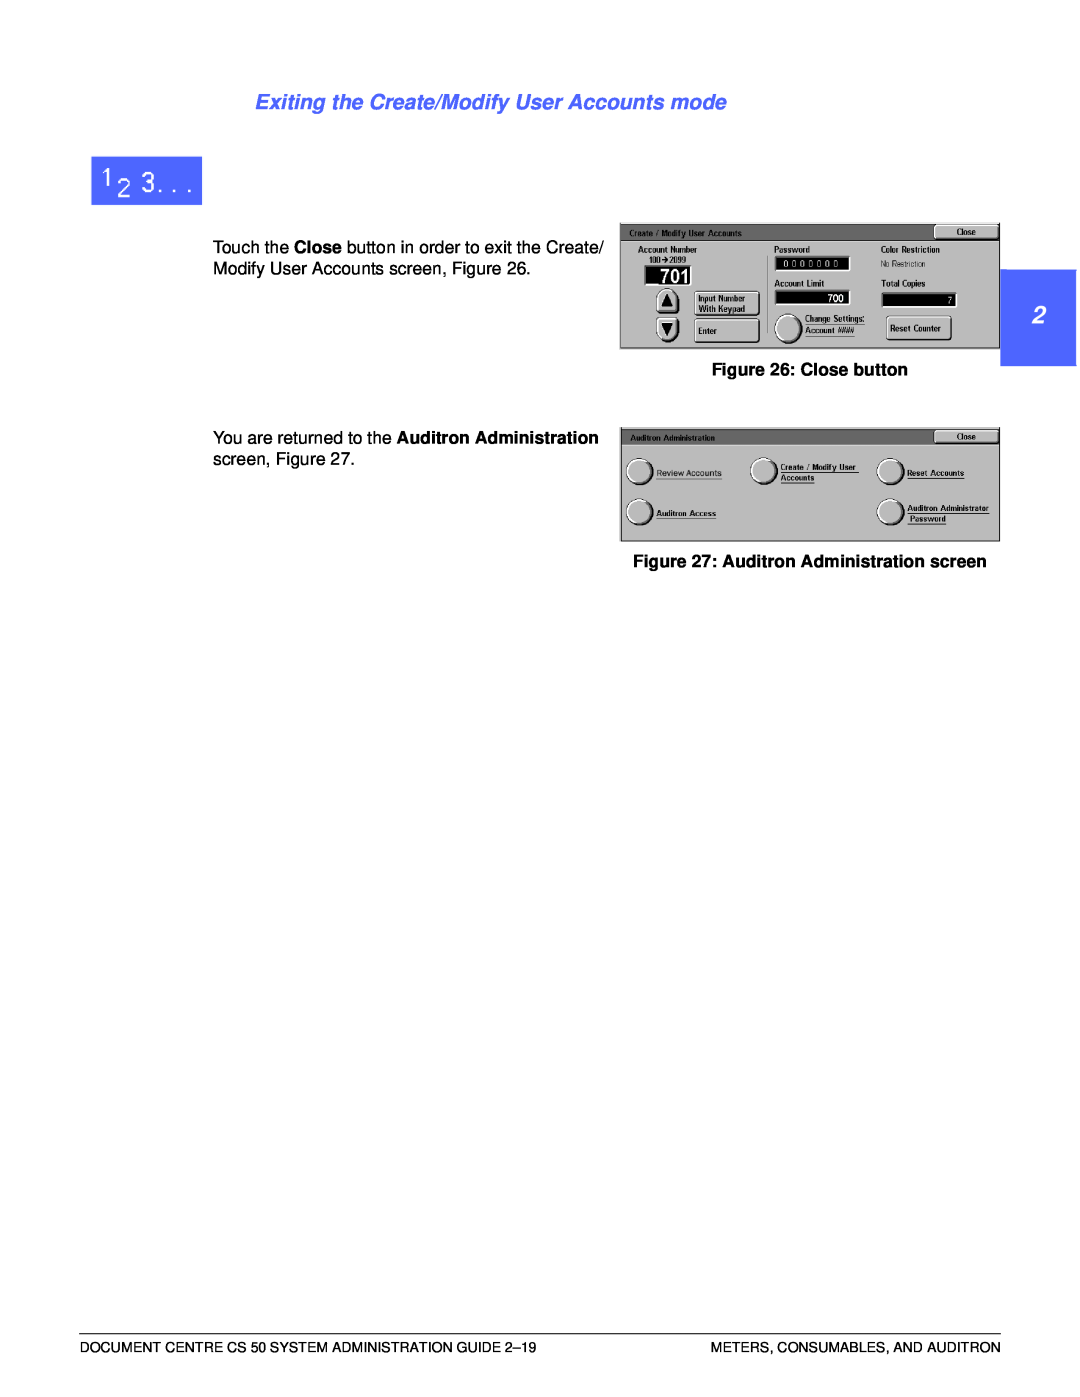 Xerox 50 manual 4 5 6 7, Exiting the Create/Modify User Accounts mode, Close button, Auditron Administration screen 